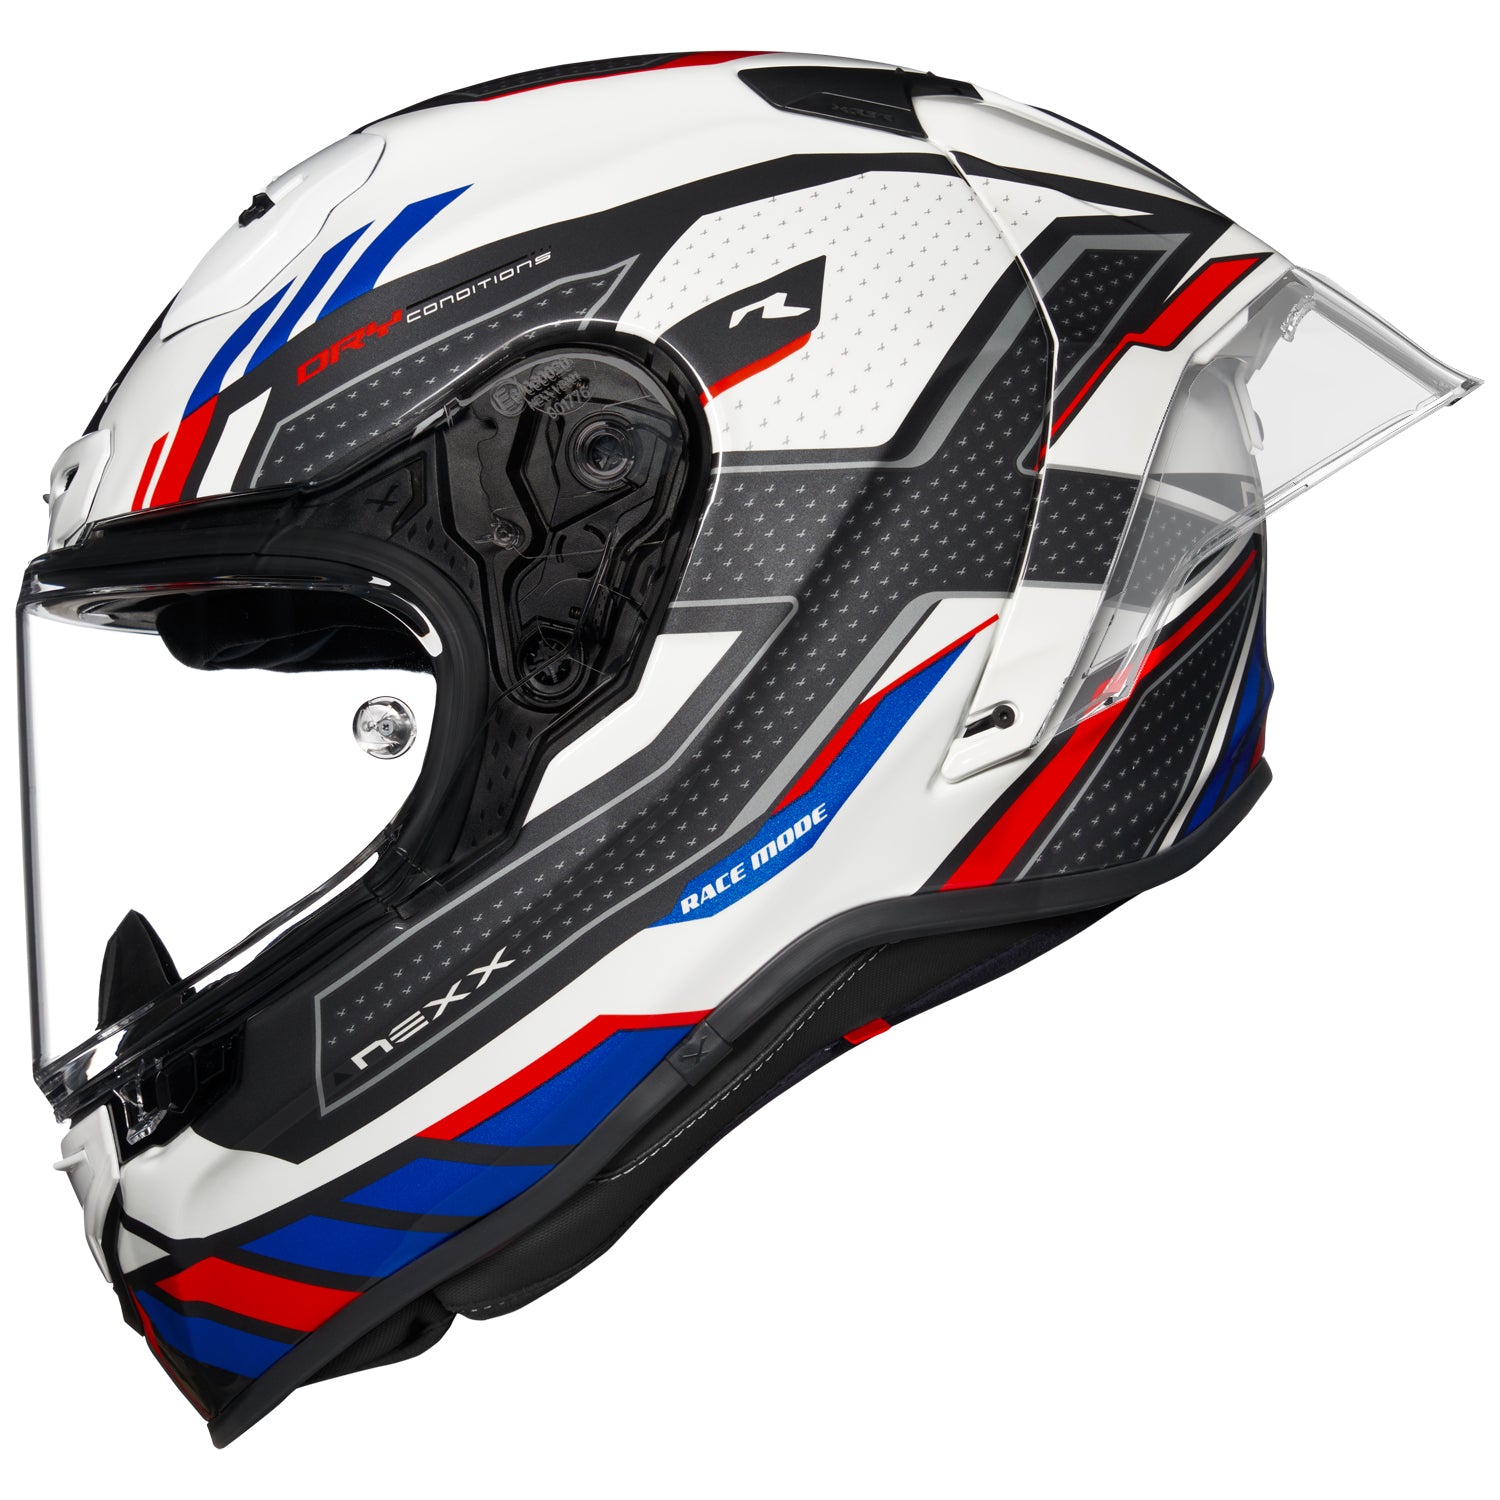 NEXX X.R3R Precision Helmet (5 Colors)